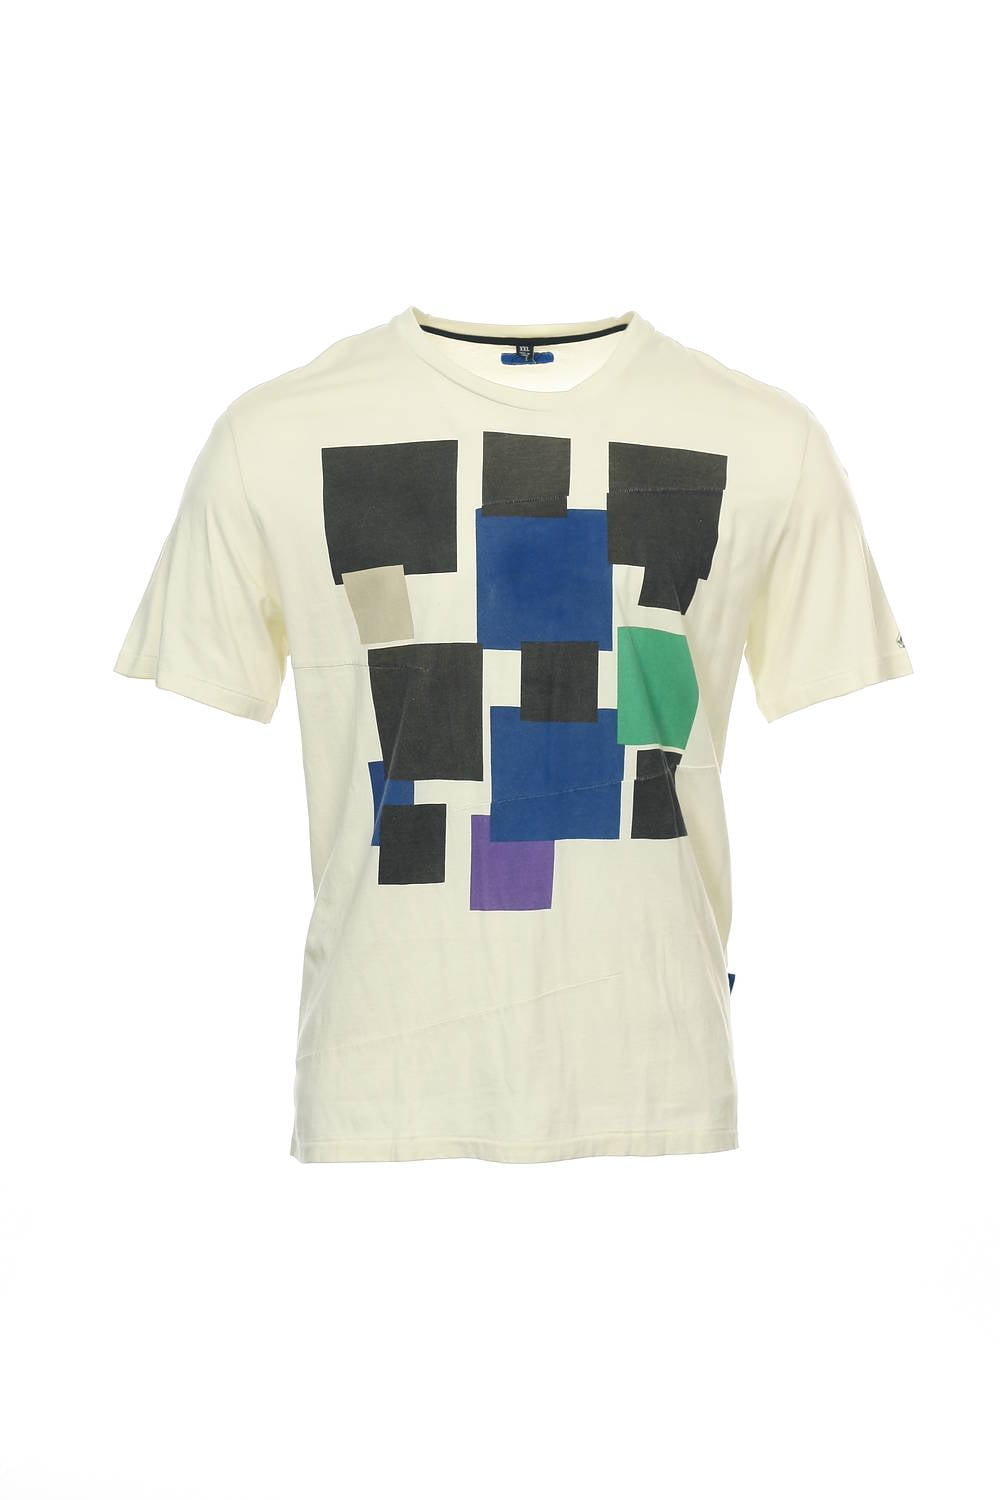 Volcom - Volcom Multi-Color Graphic T-Shirt Tee Shirt , Size 2XLarge ...